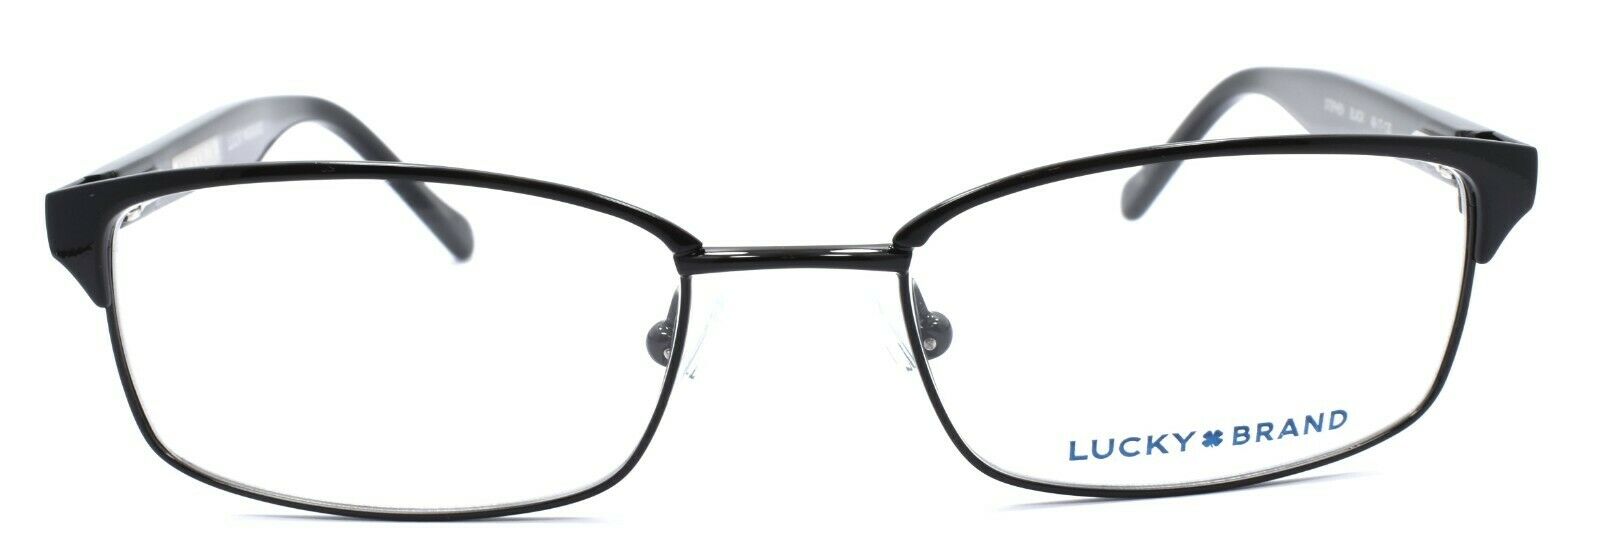 2-LUCKY BRAND Stephen Kids Boys Eyeglasses Frames 48-17-130 Black + CASE-751286136326-IKSpecs